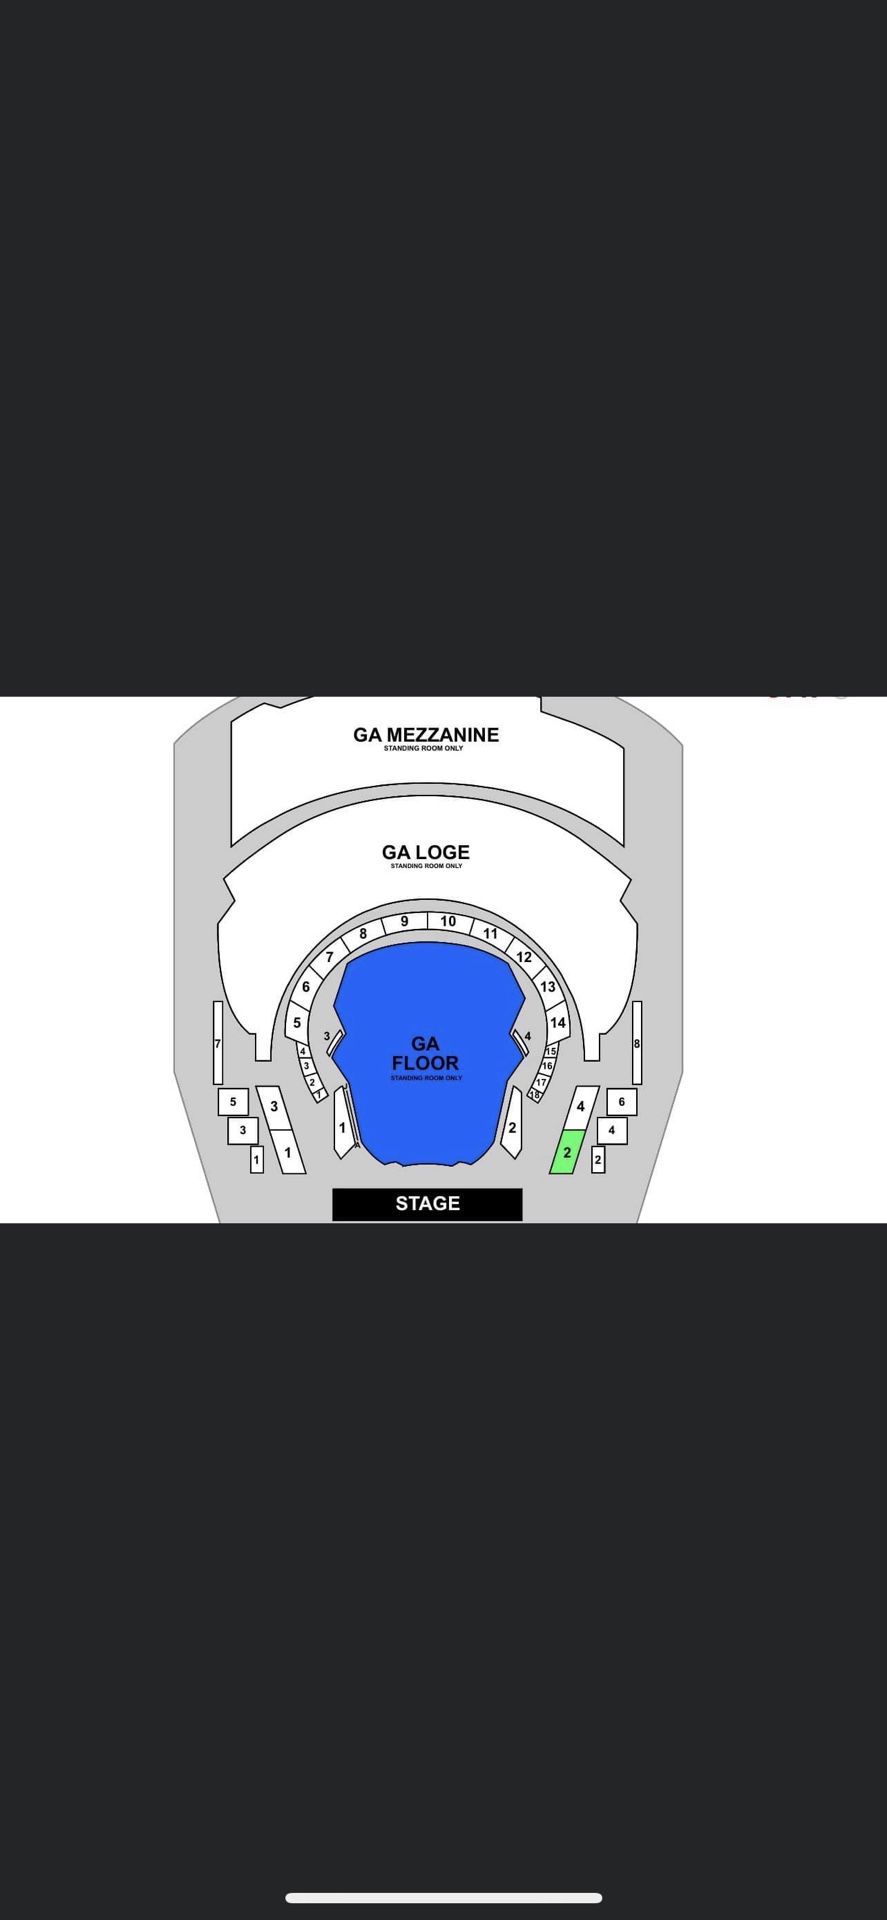 Deadmau5 Concert Tickets 